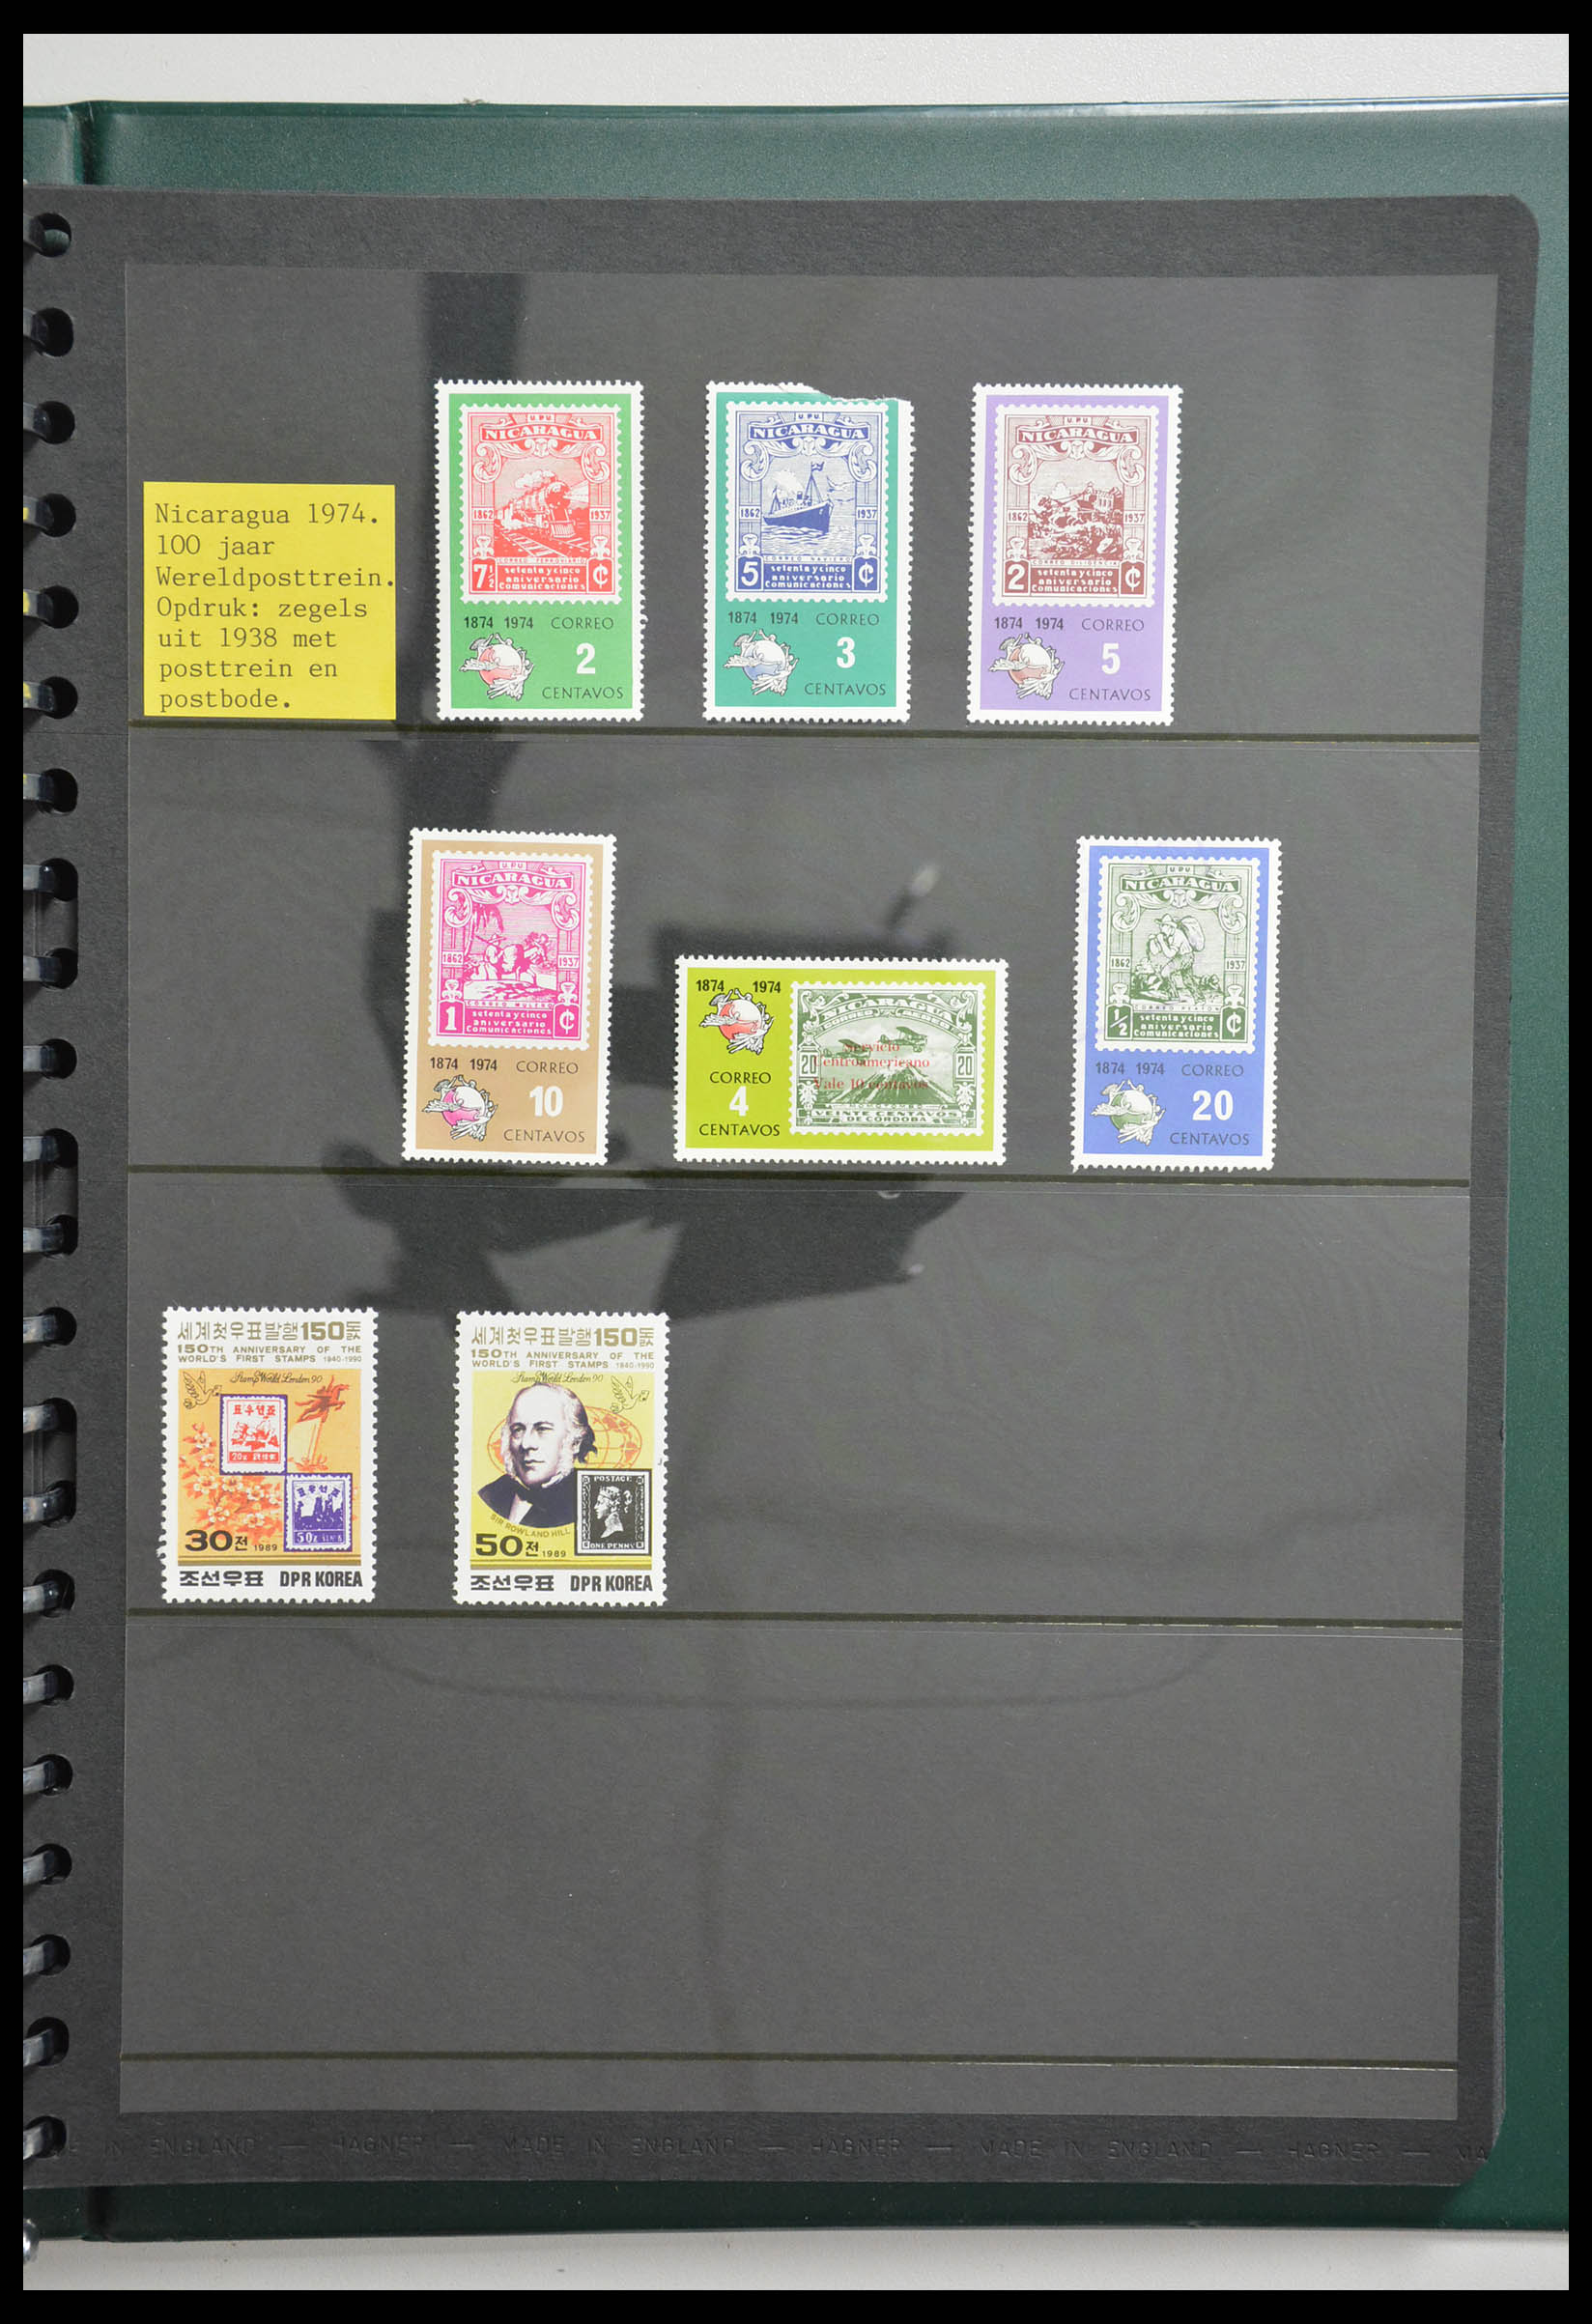 28337 120 - 28337 Postzegel op postzegel 1840-2001.